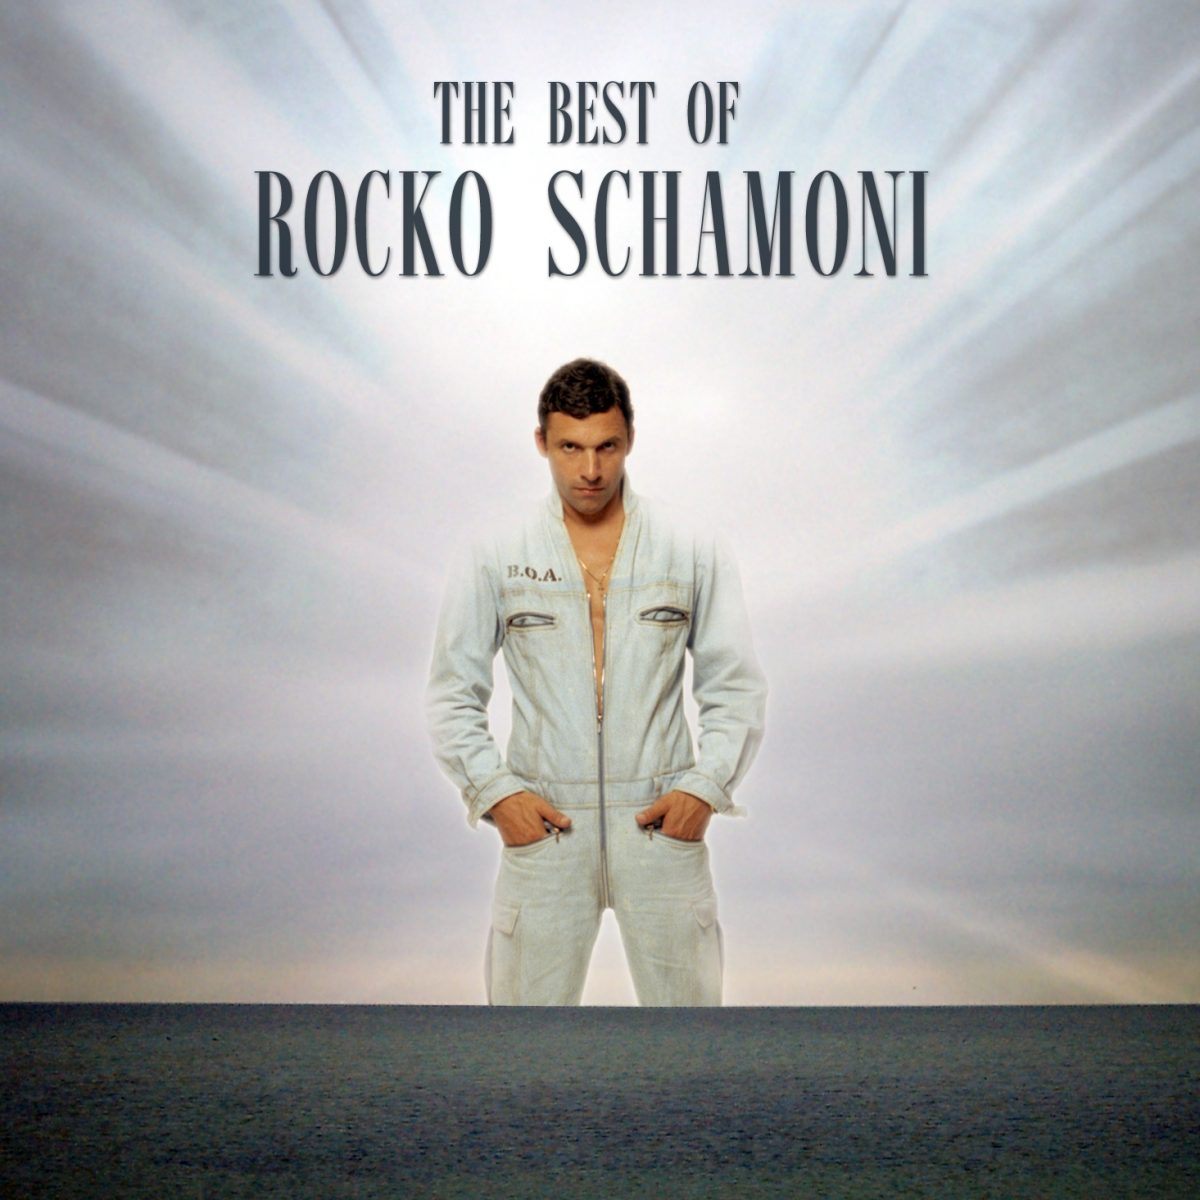 The Best of Rocko Schamoni